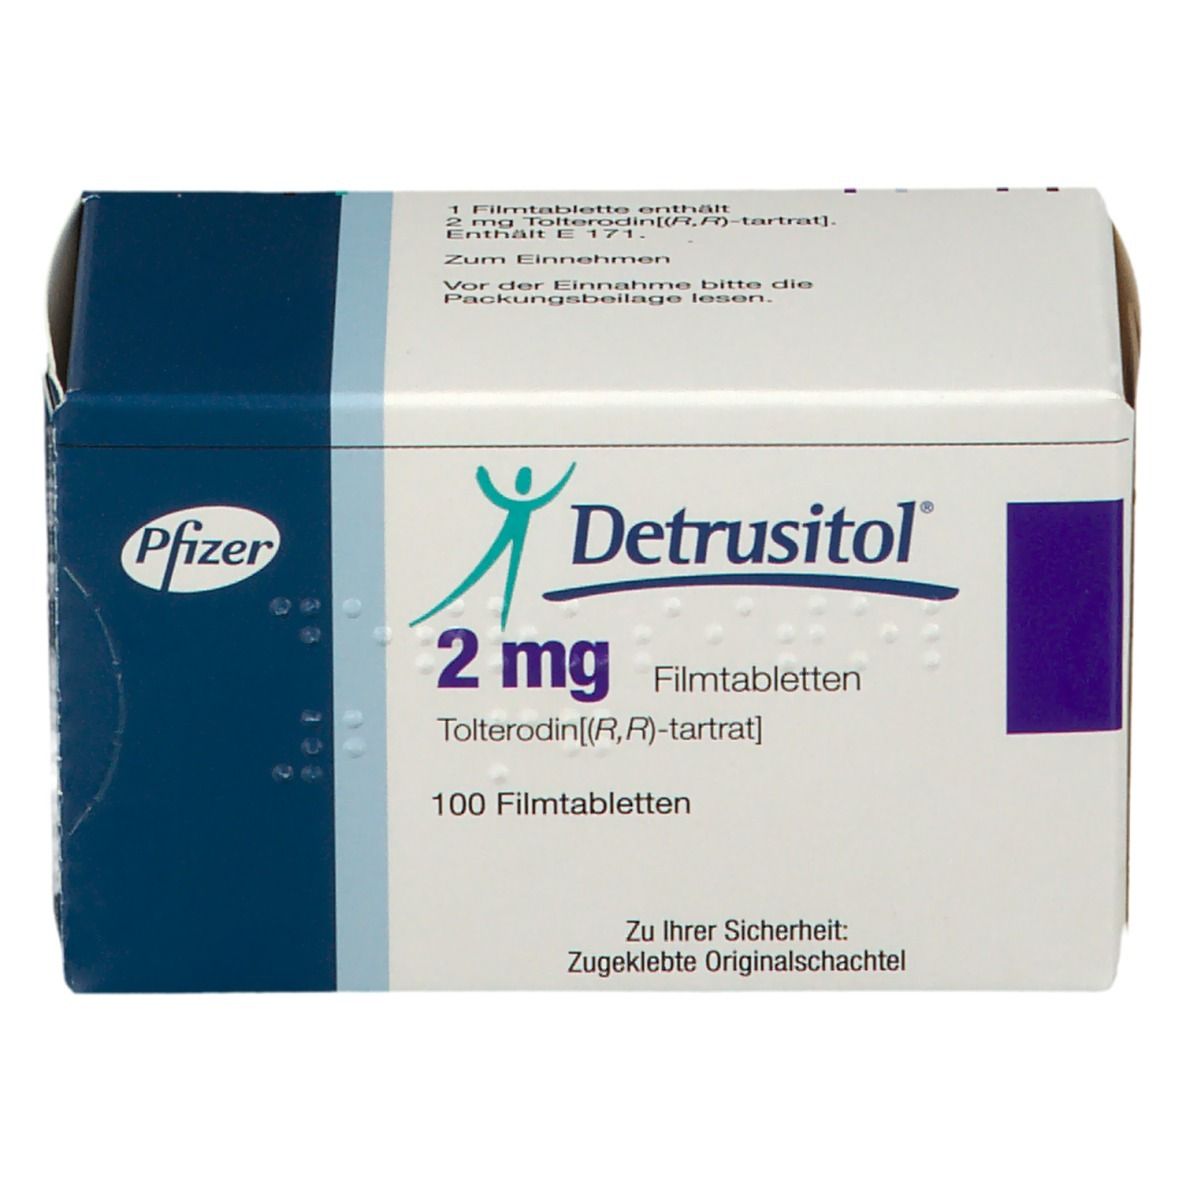 Detrusitol® 2 mg